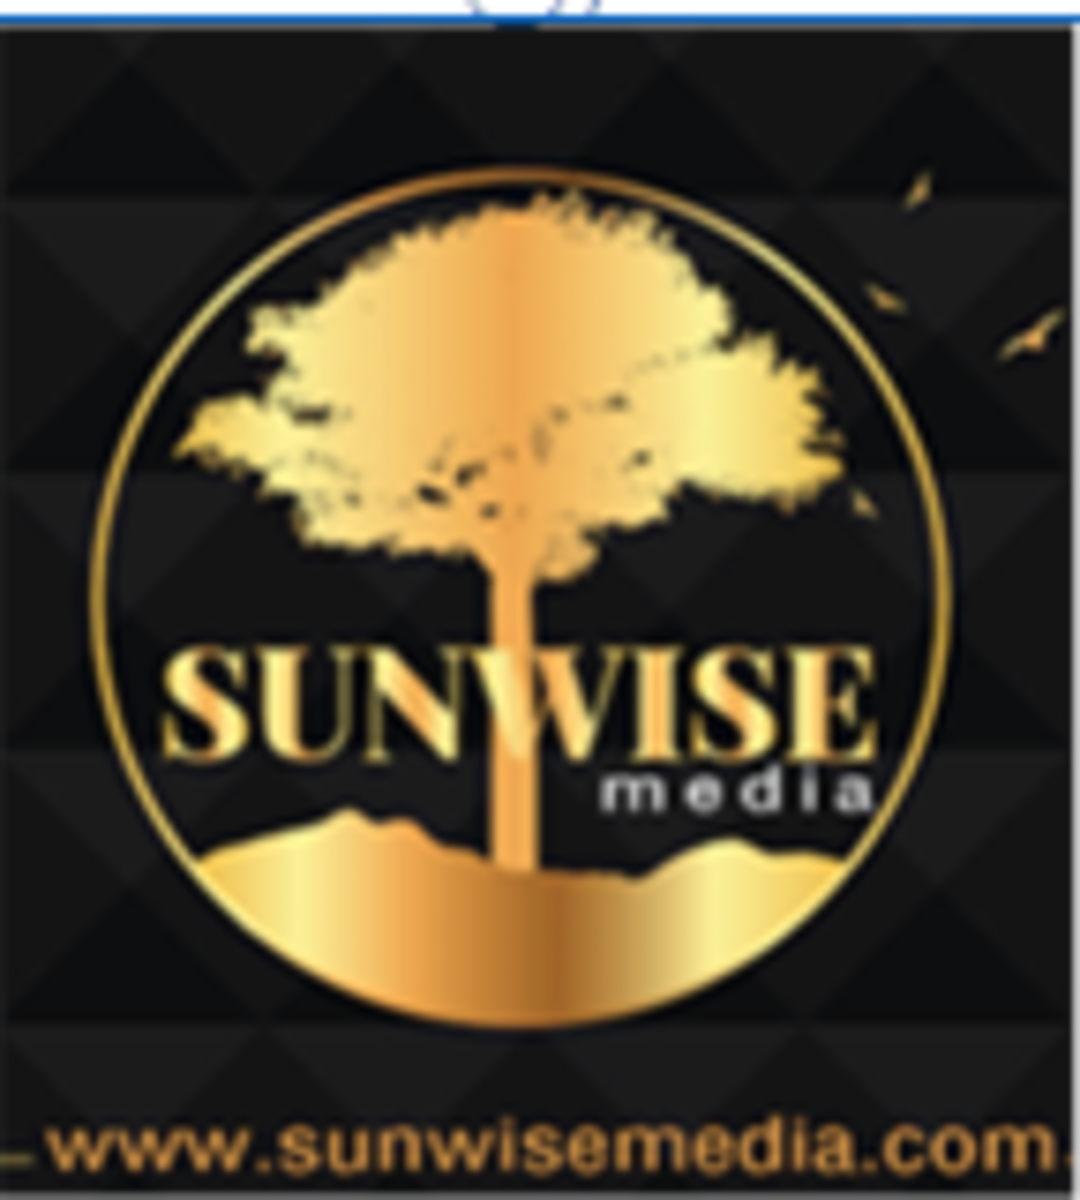 Sunwise Media Documentary Wins Gold at Spotlight Awards